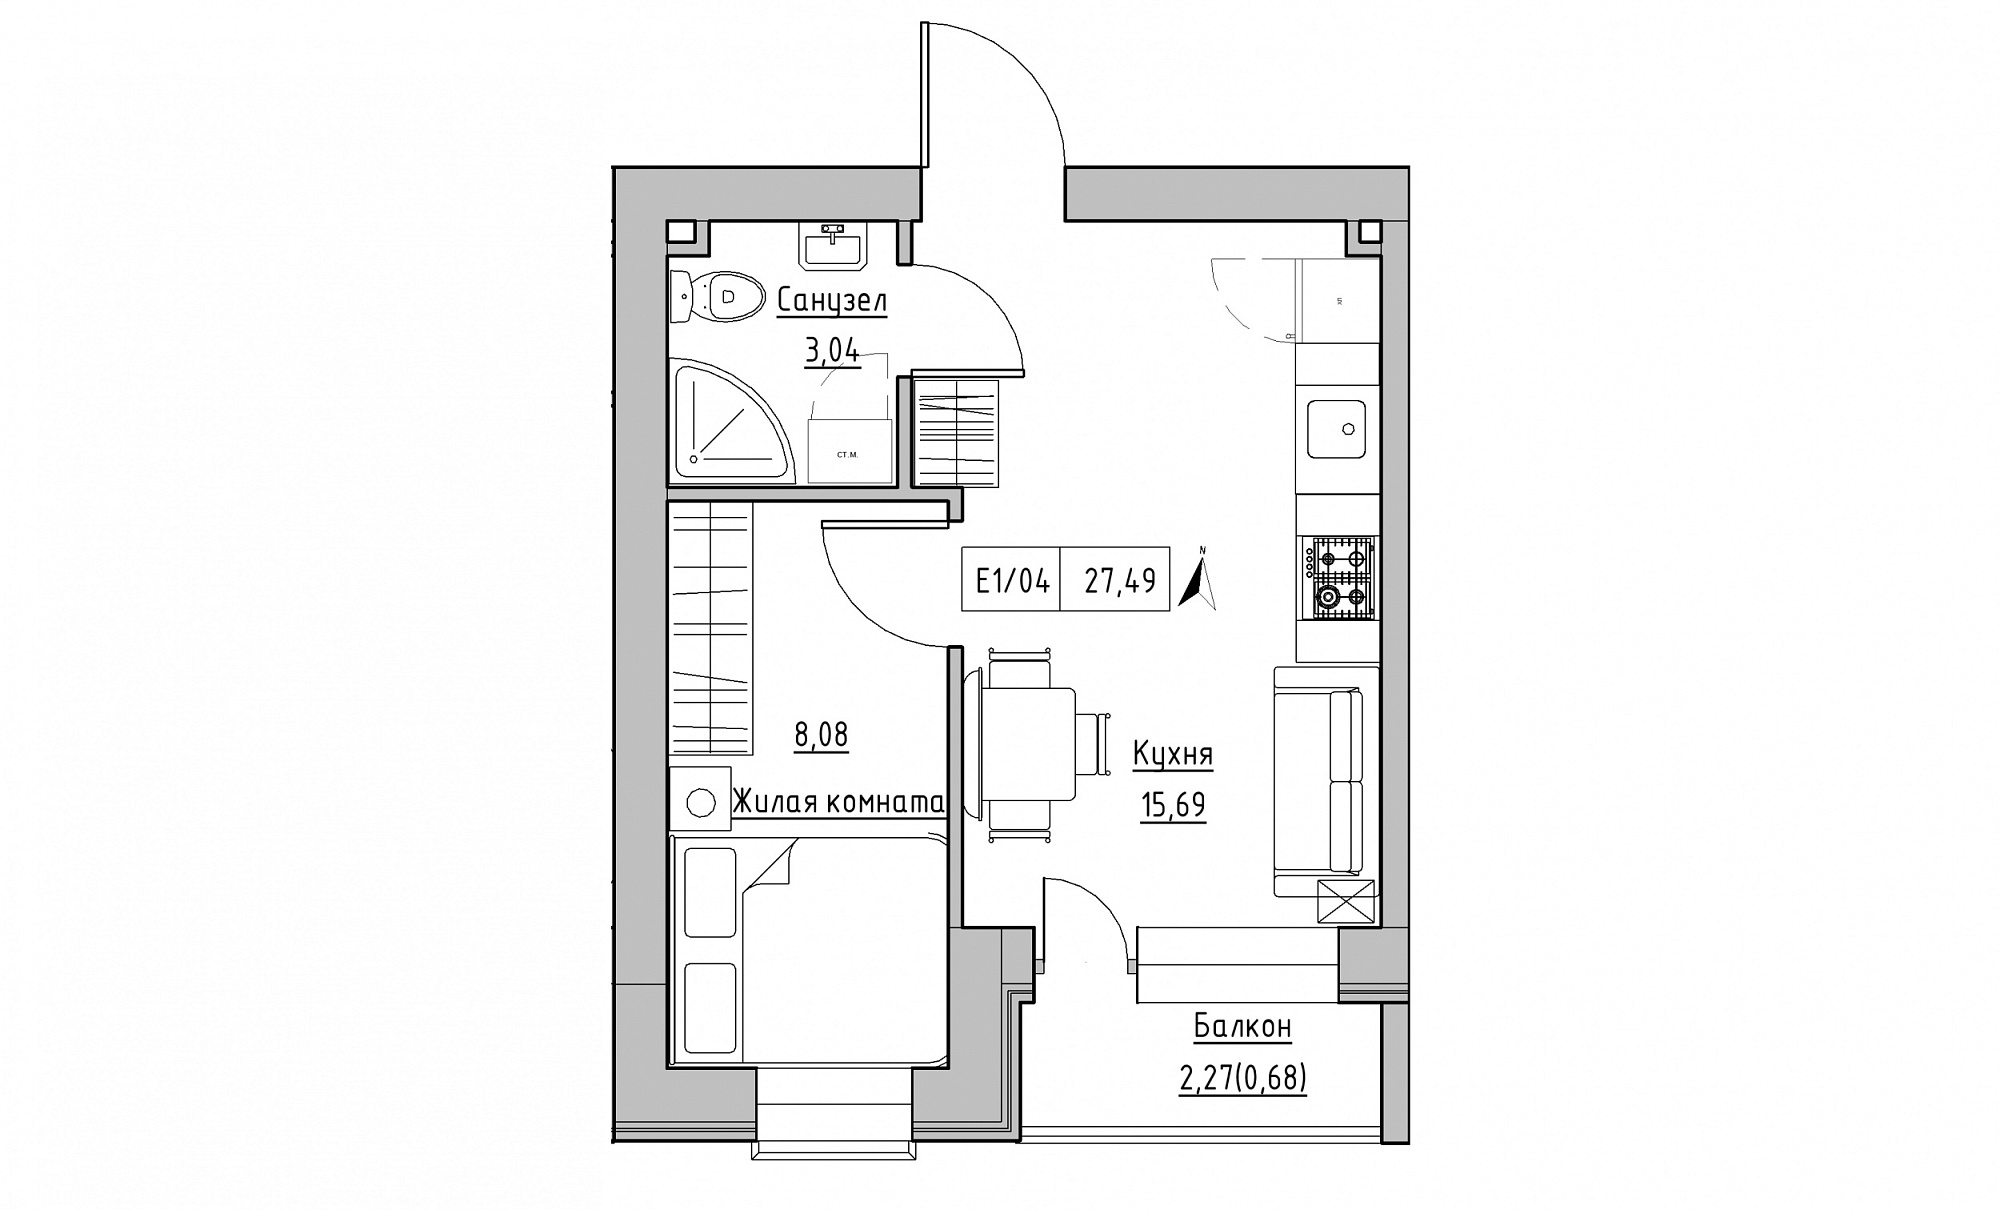 Planning 1-rm flats area 27.49m2, KS-015-05/0012.